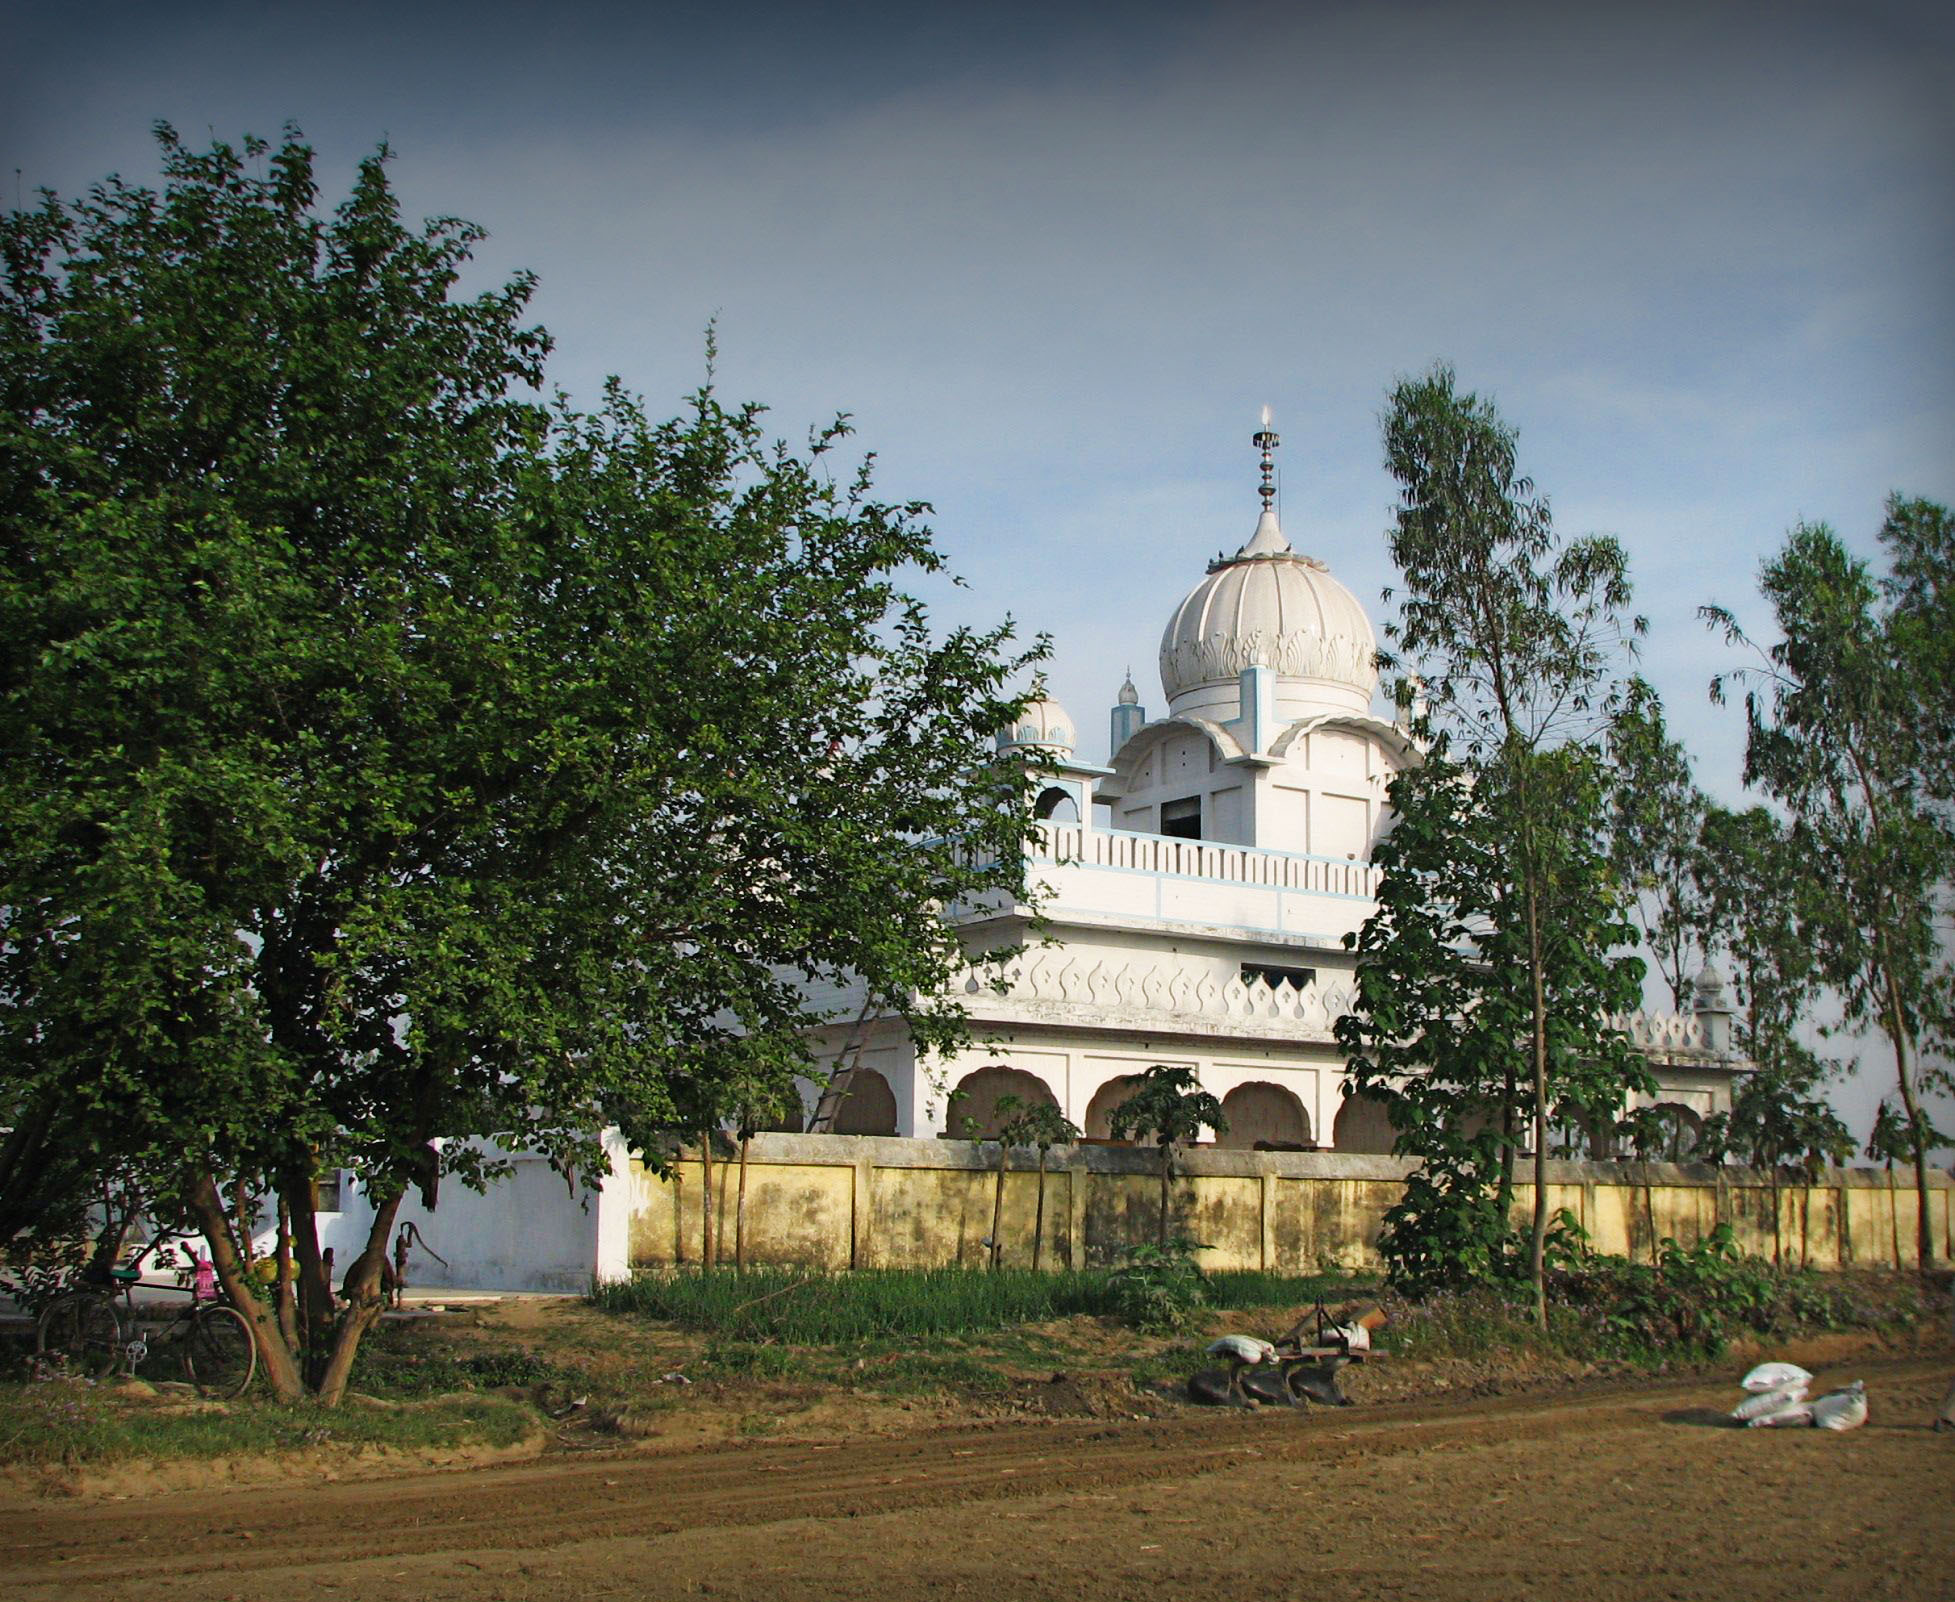 Gurudwara Mar Jiwala Sahib, Tanda